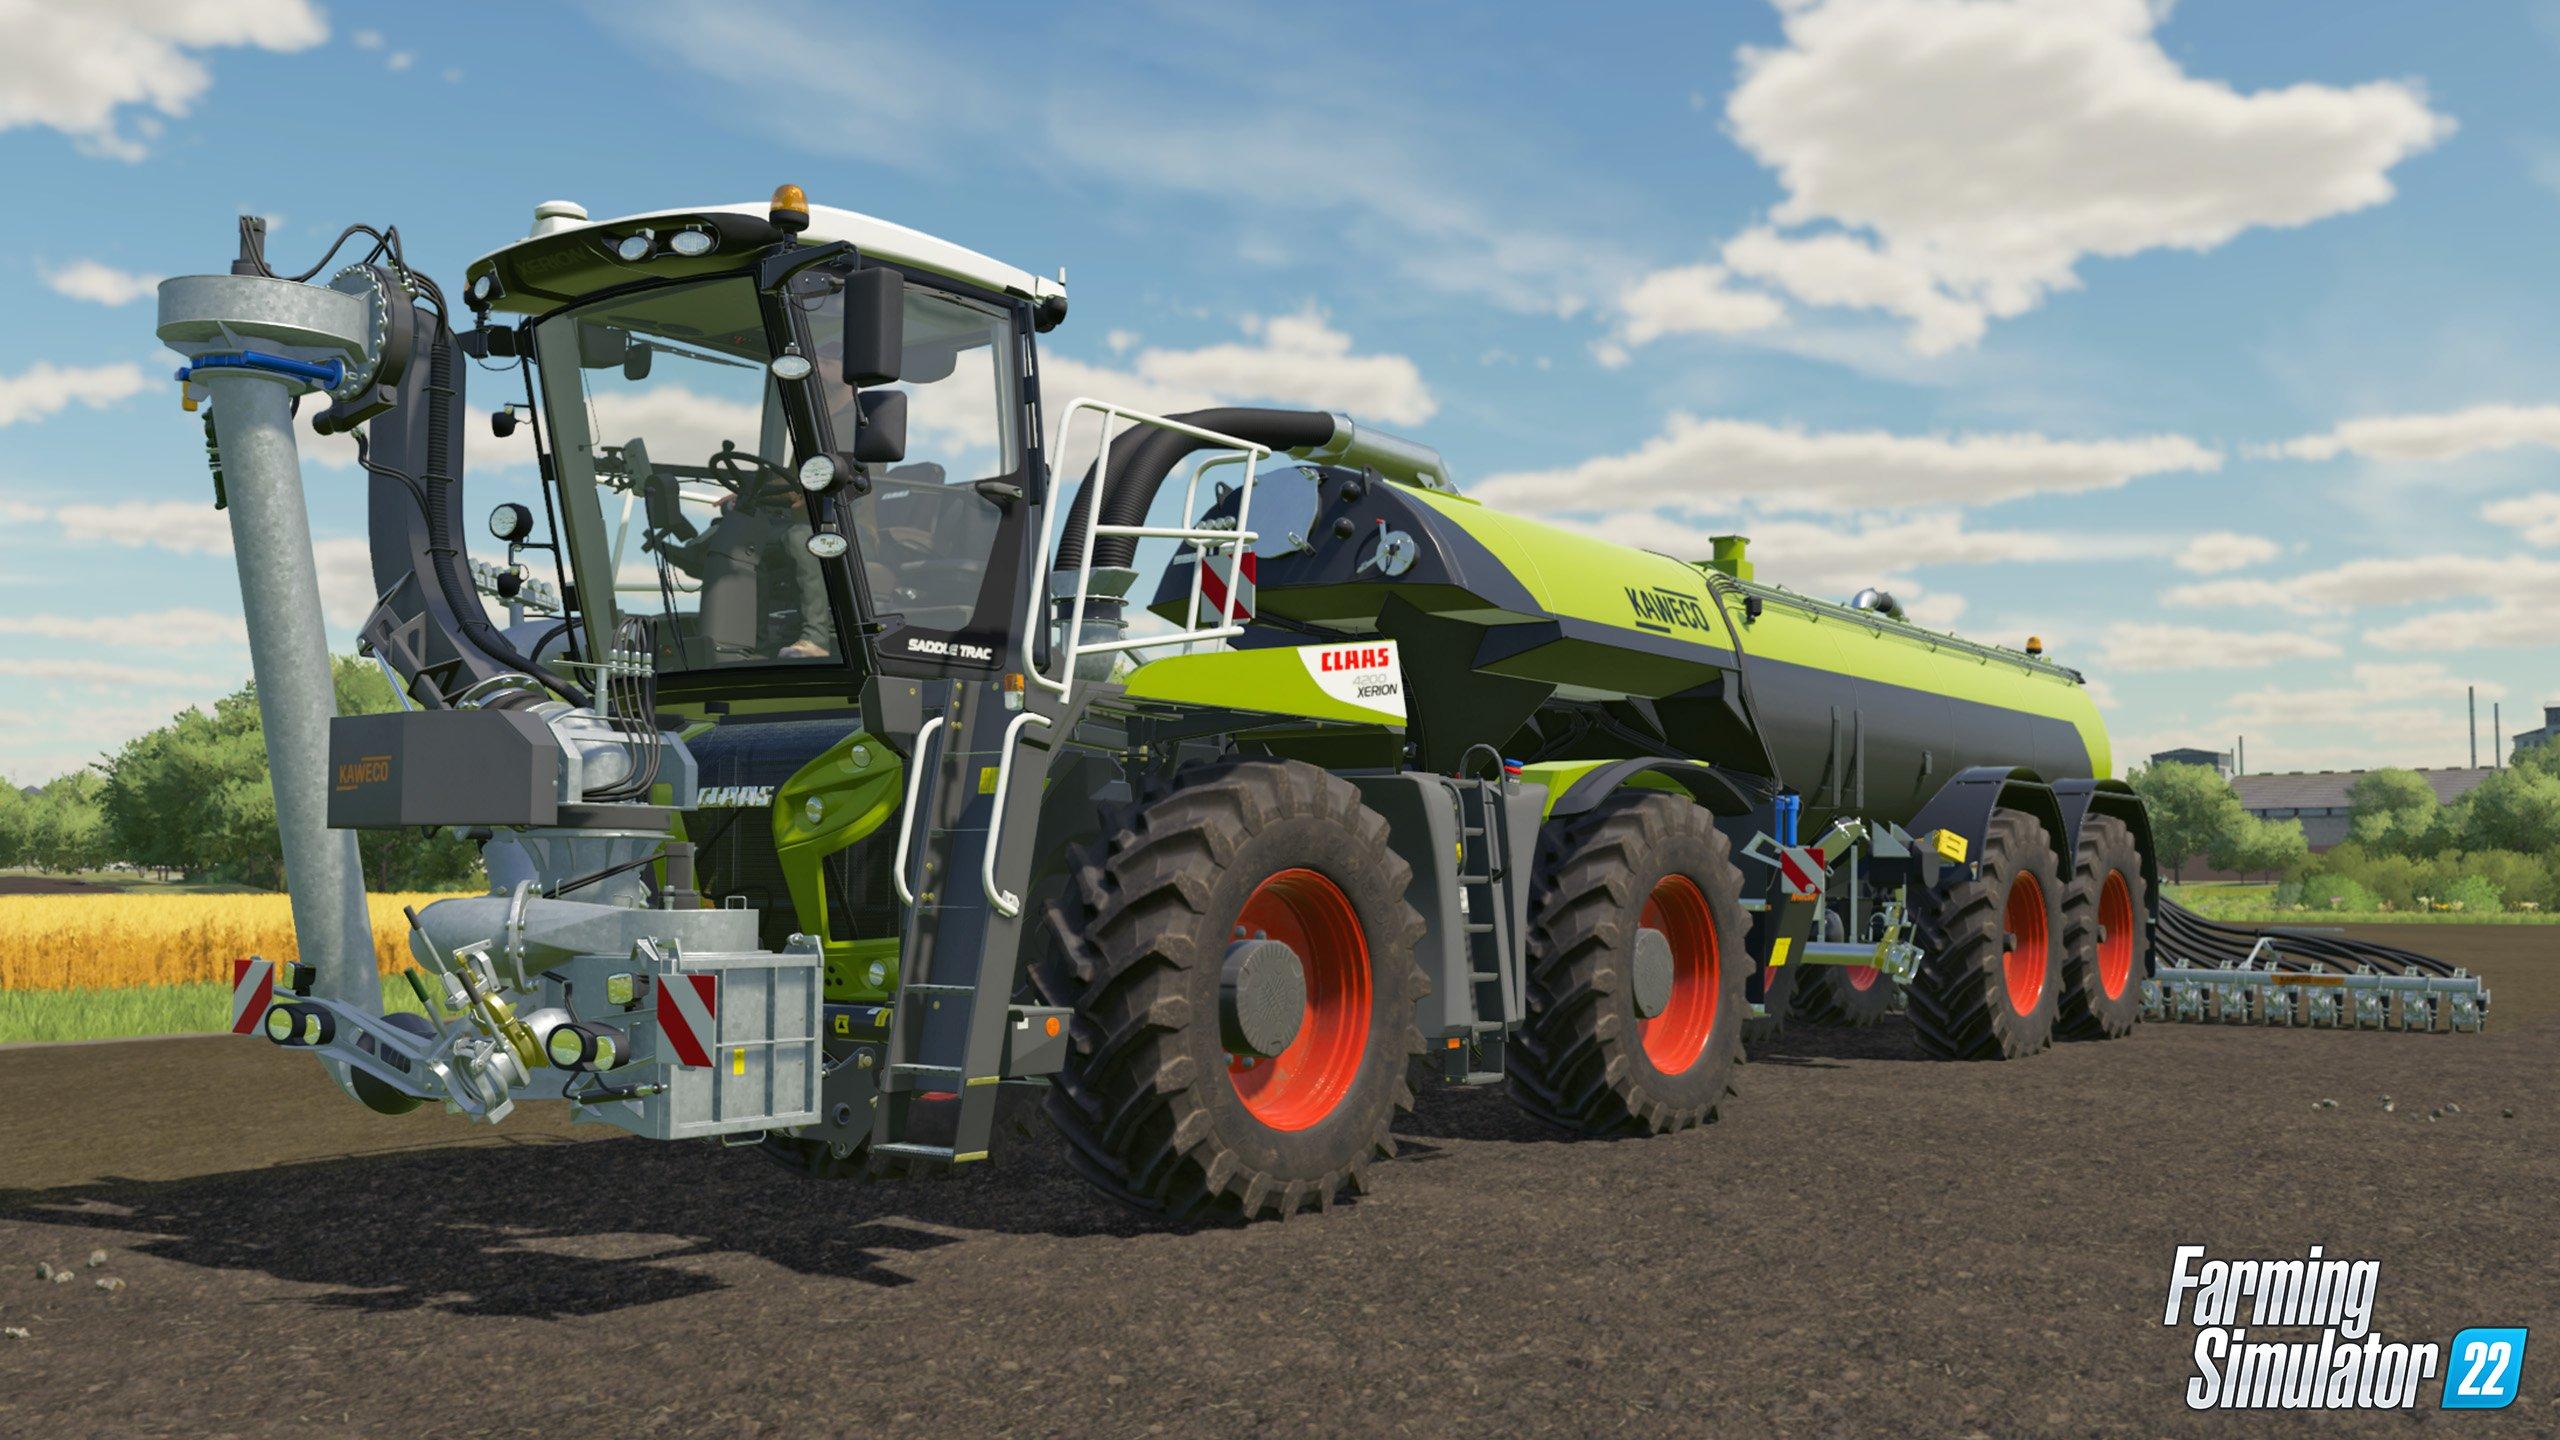 Buy Farming Simulator 22 - PlayStation 5 - Standard - English